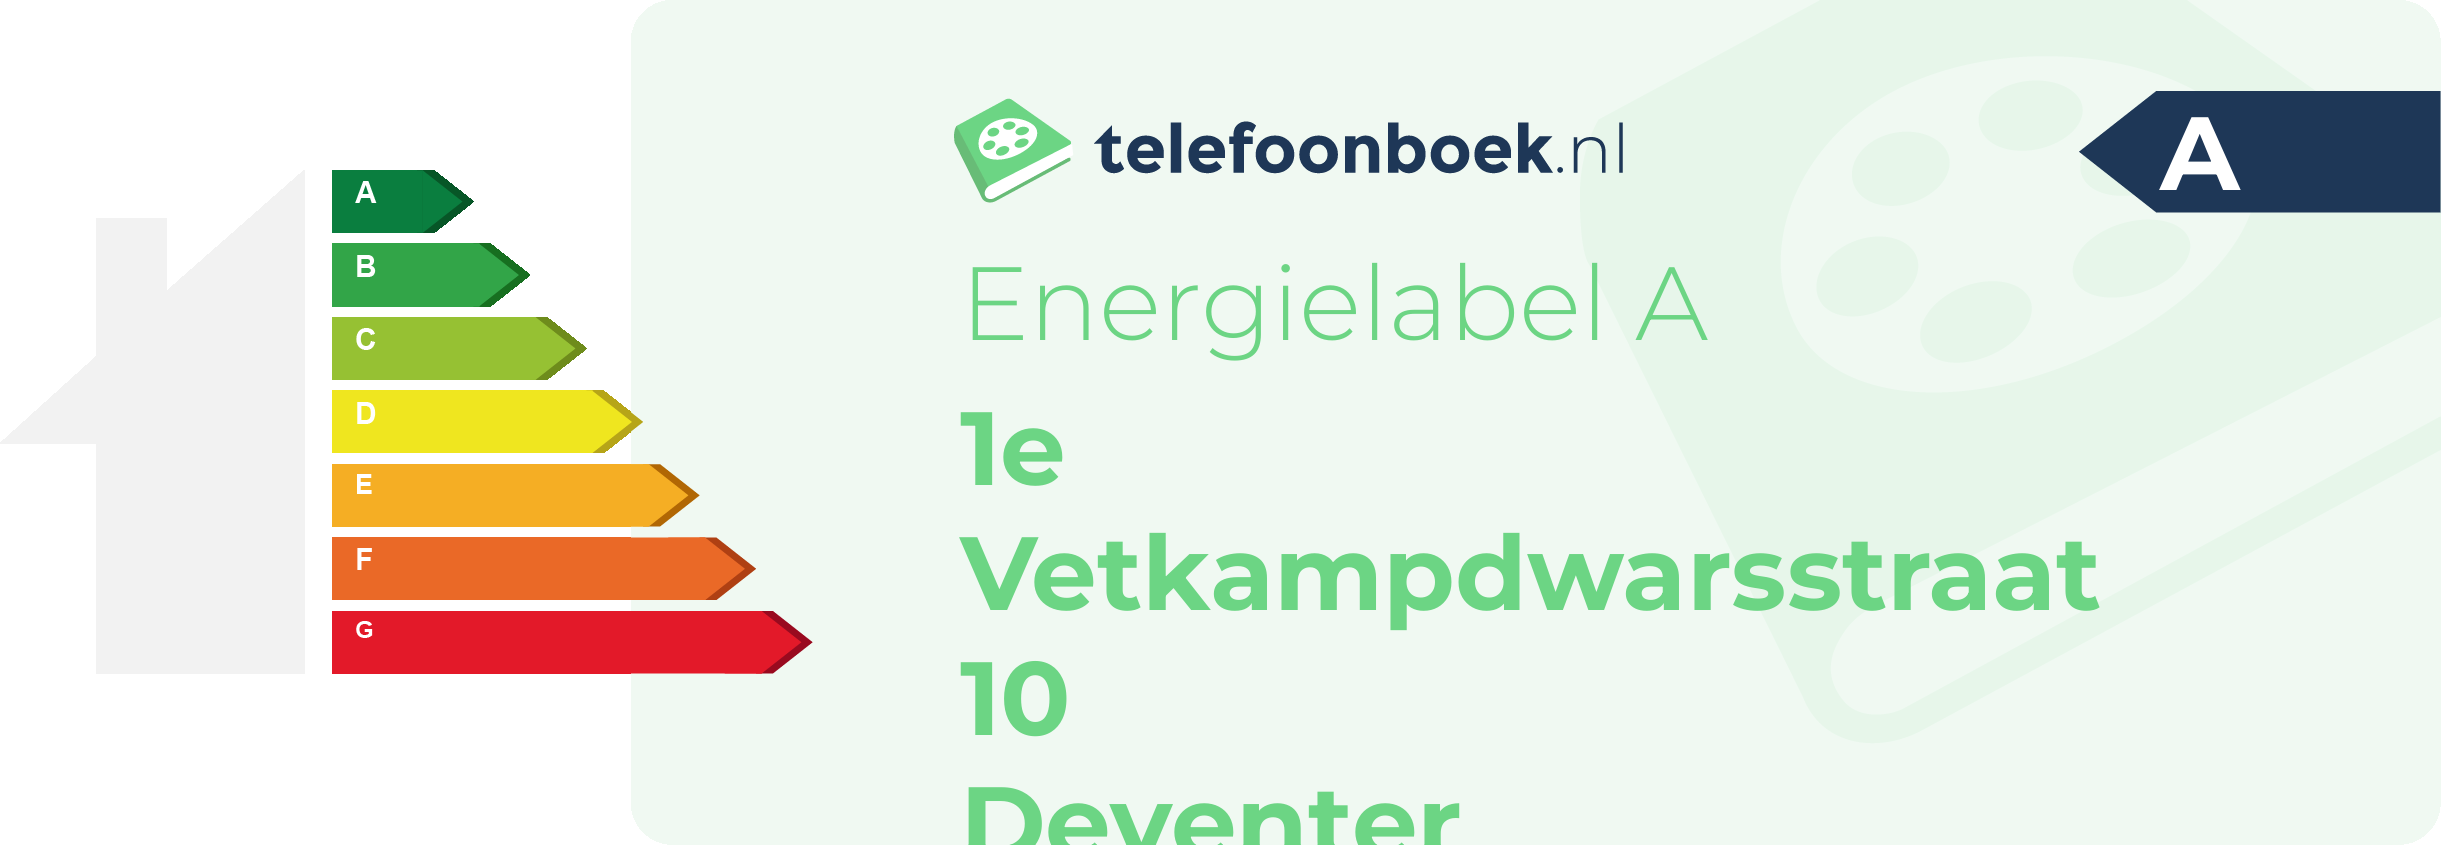 Energielabel 1e Vetkampdwarsstraat 10 Deventer